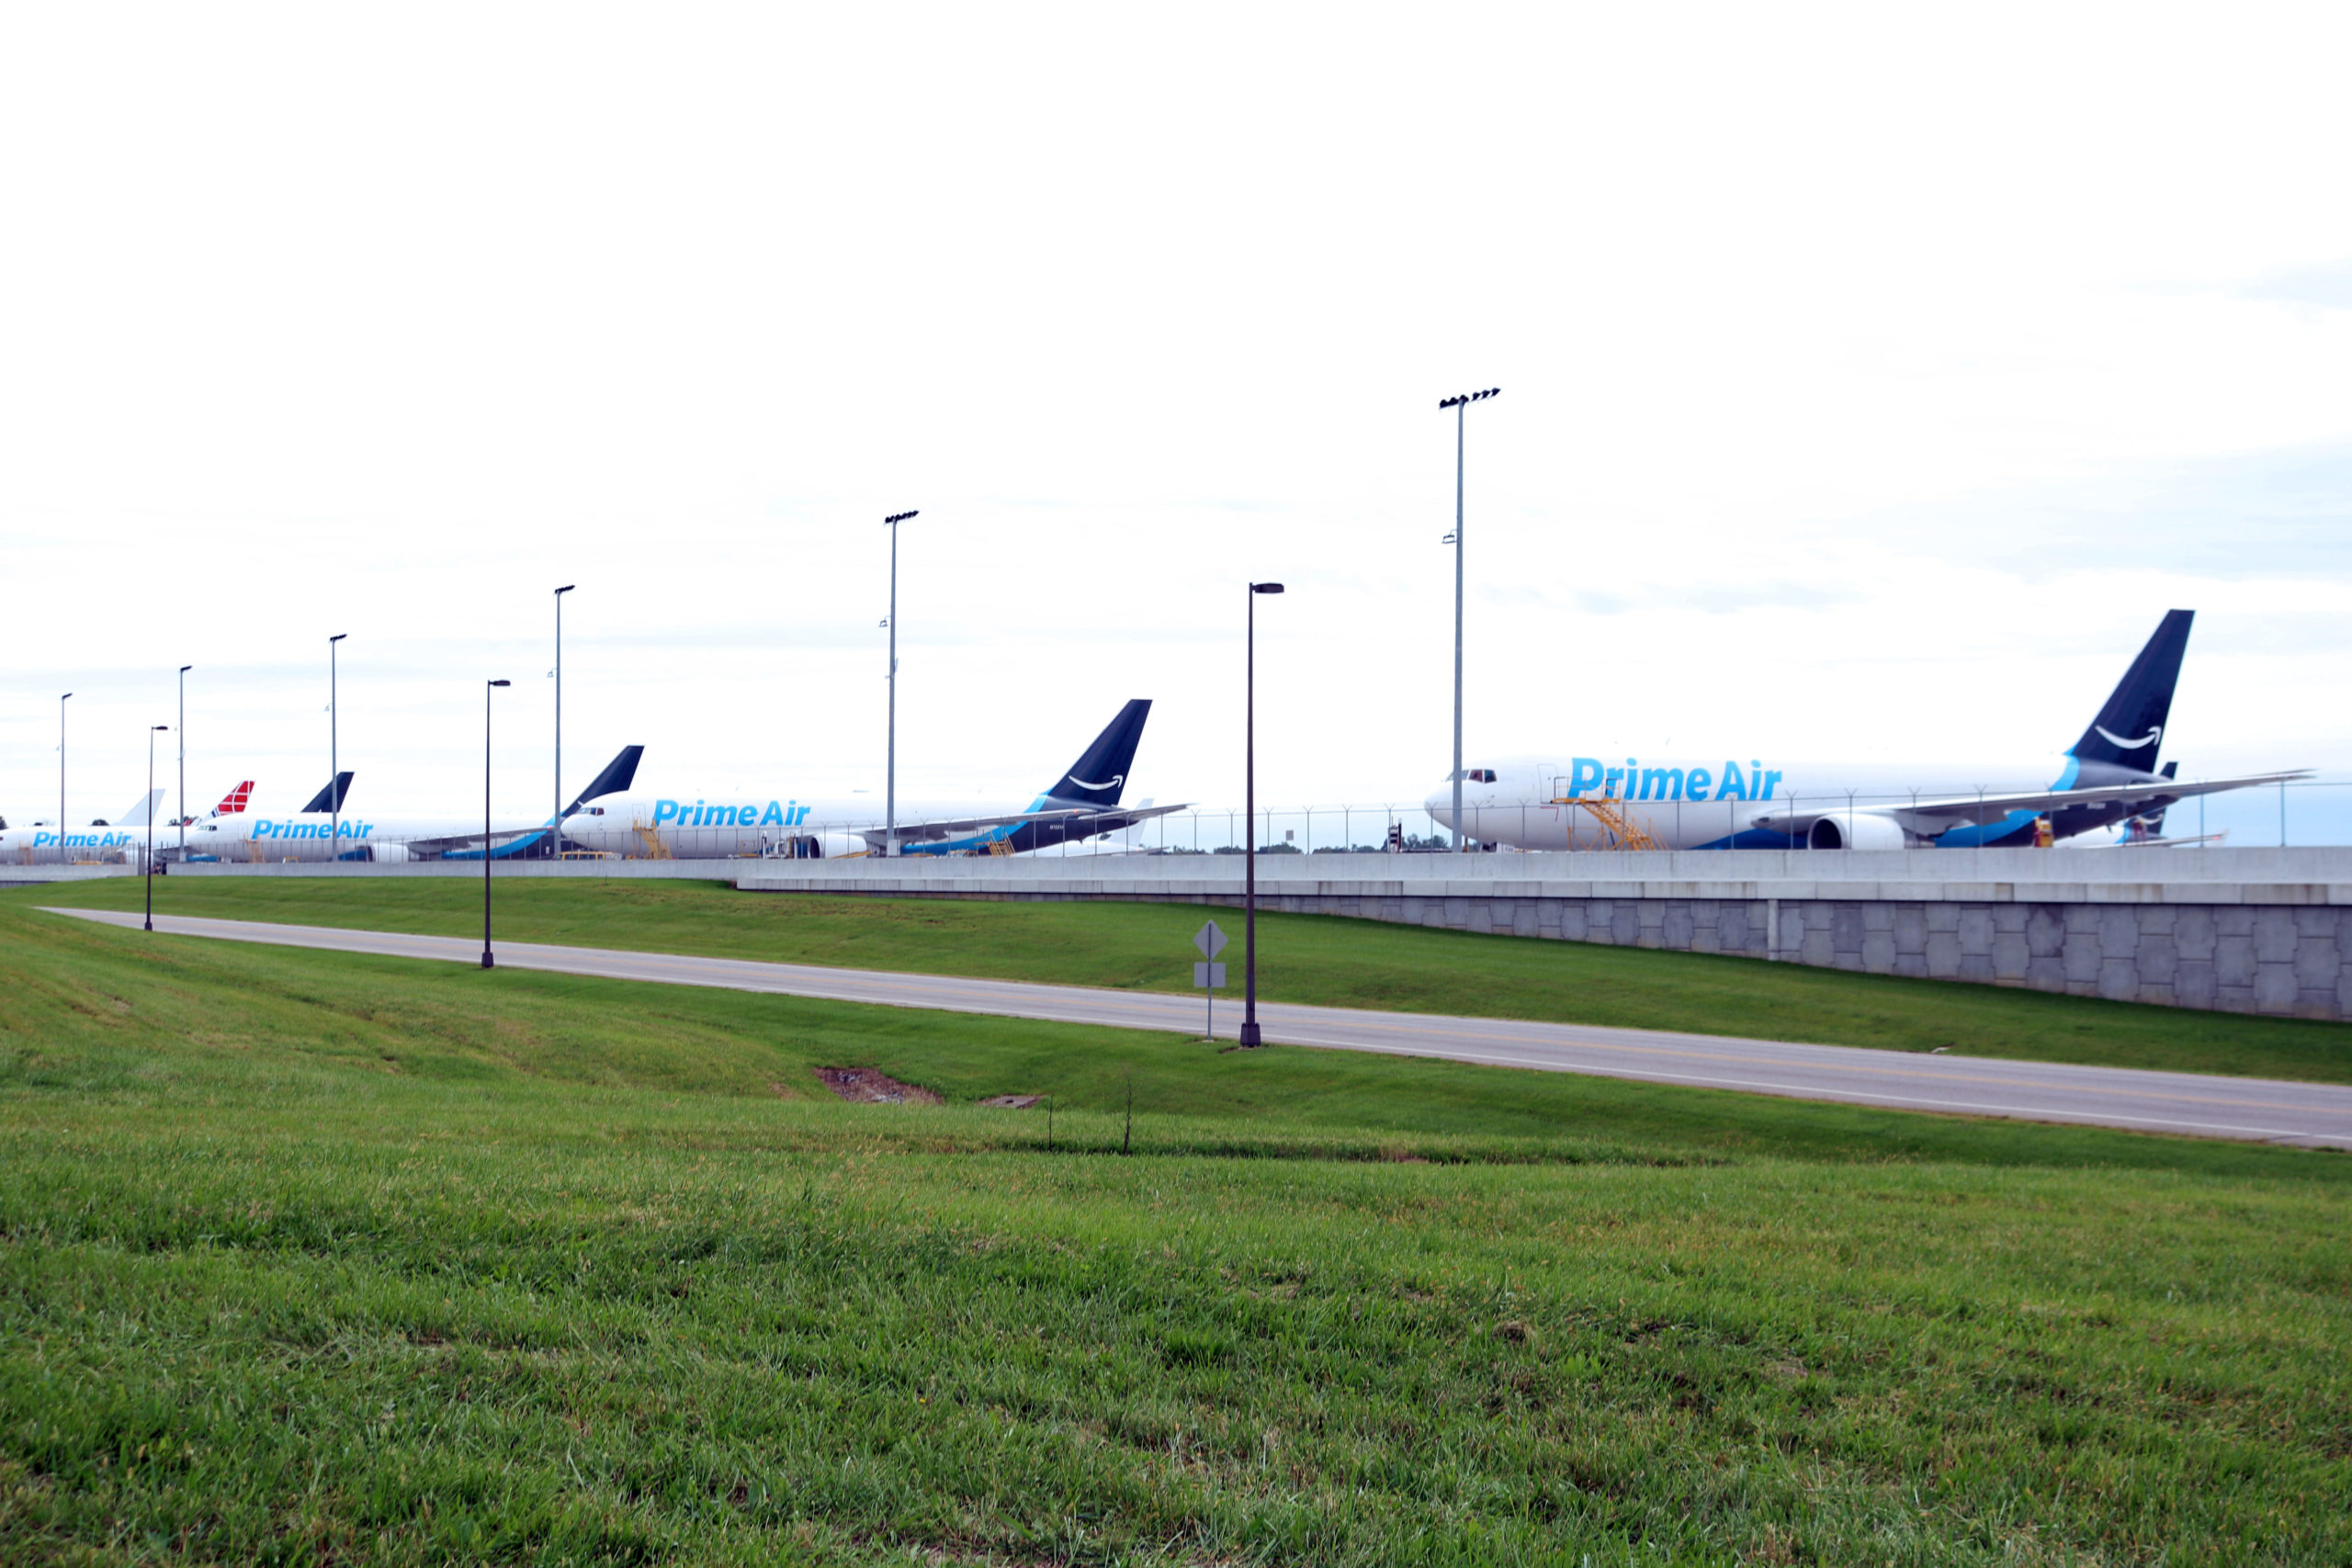 Amazon Air's fleet of 737s parked at CVG.